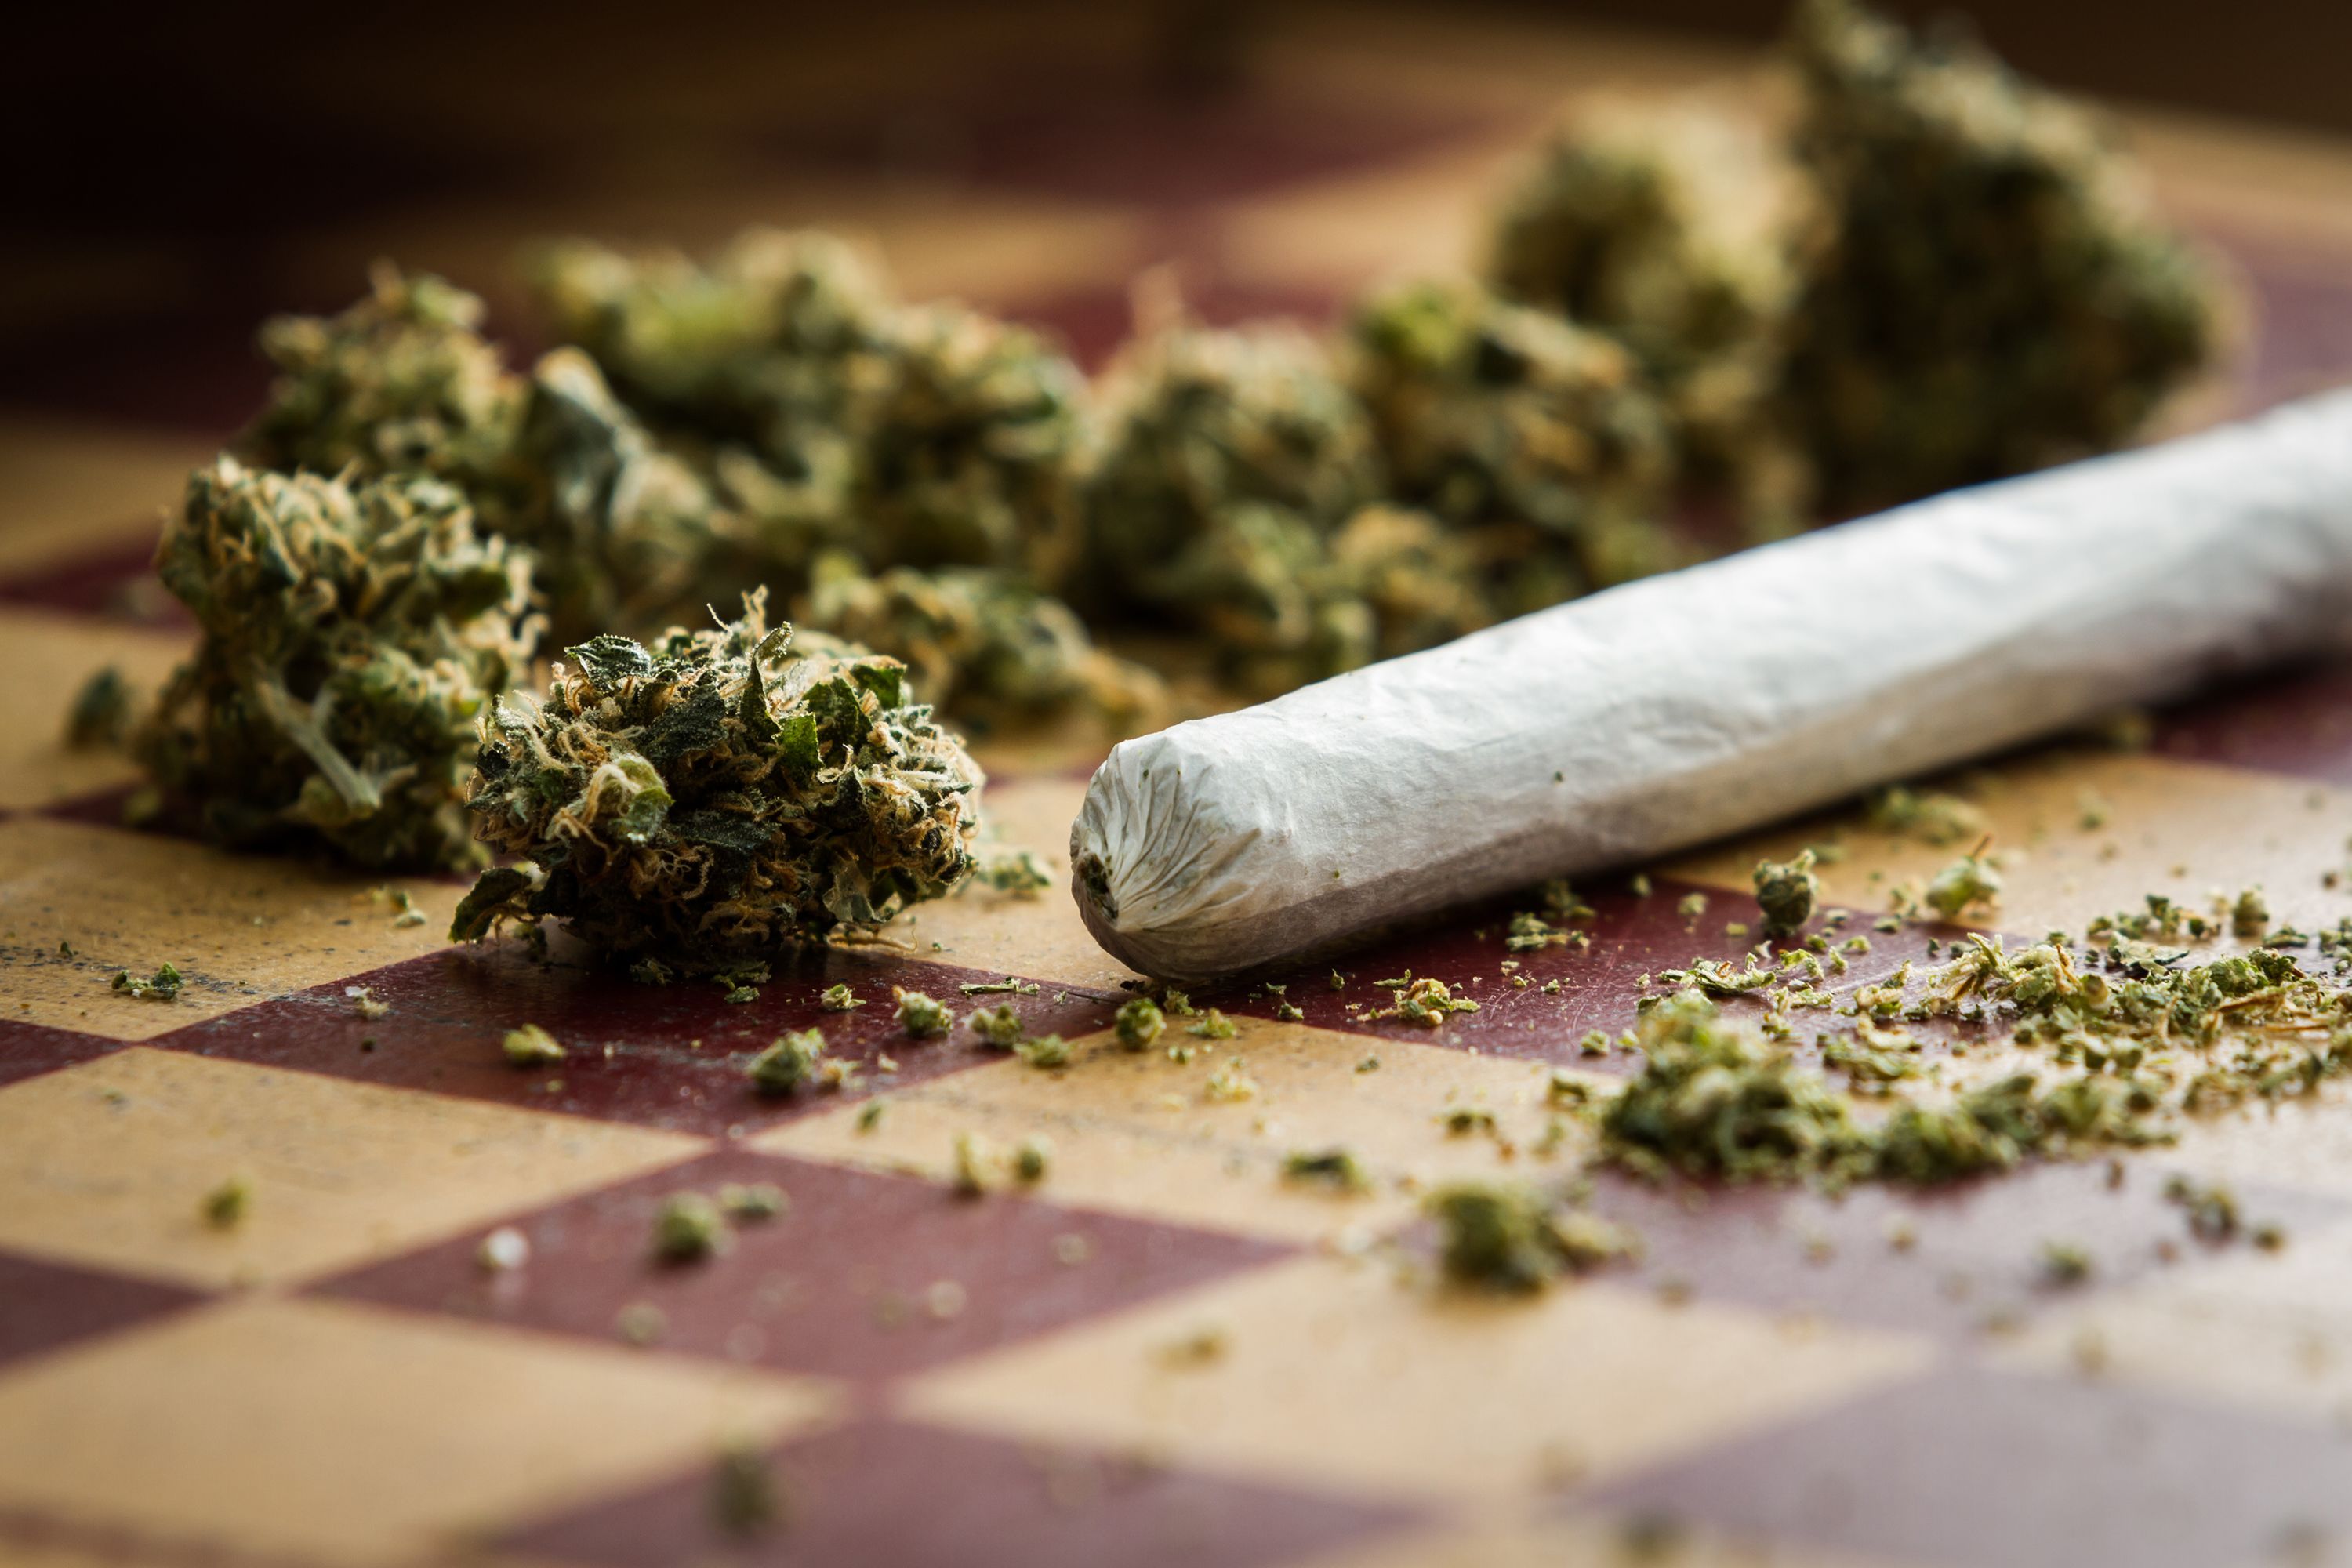 Marijuana smoke harms lungs in tobacco smokers, study finds | CNN